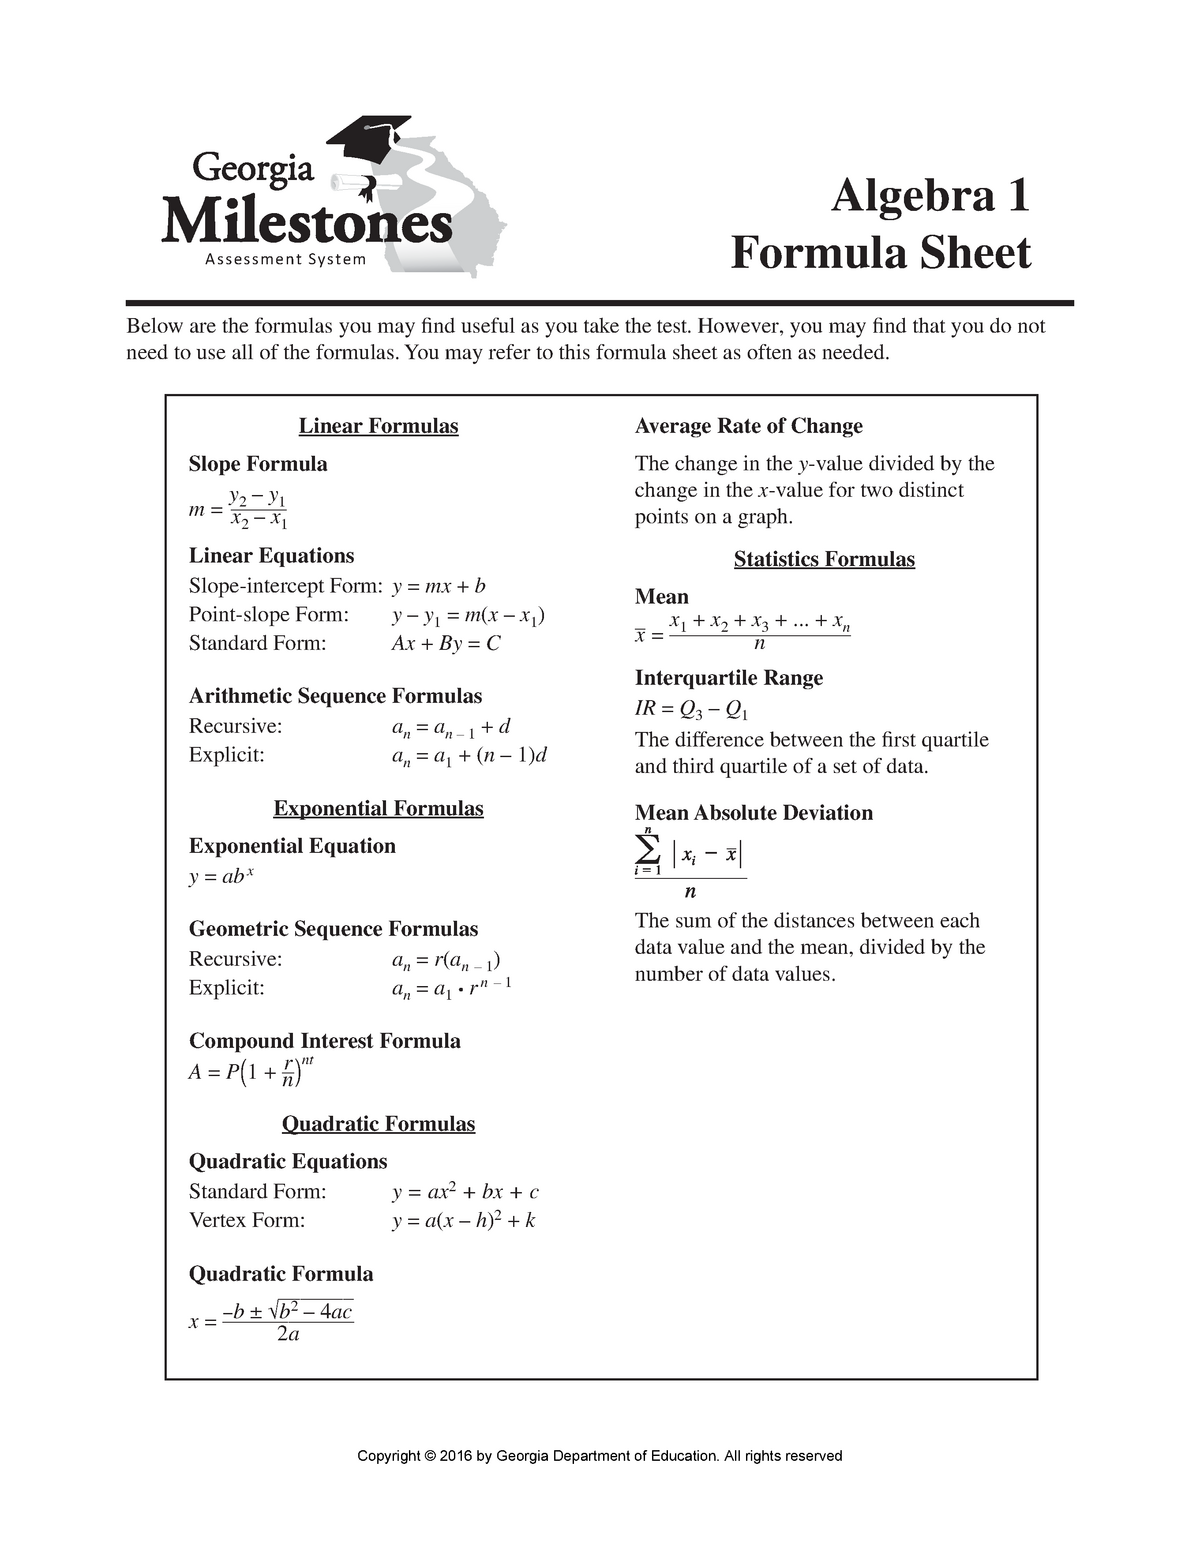 Algebra I Formula Sheet Algebra 1 Assessment System Formula Sheet